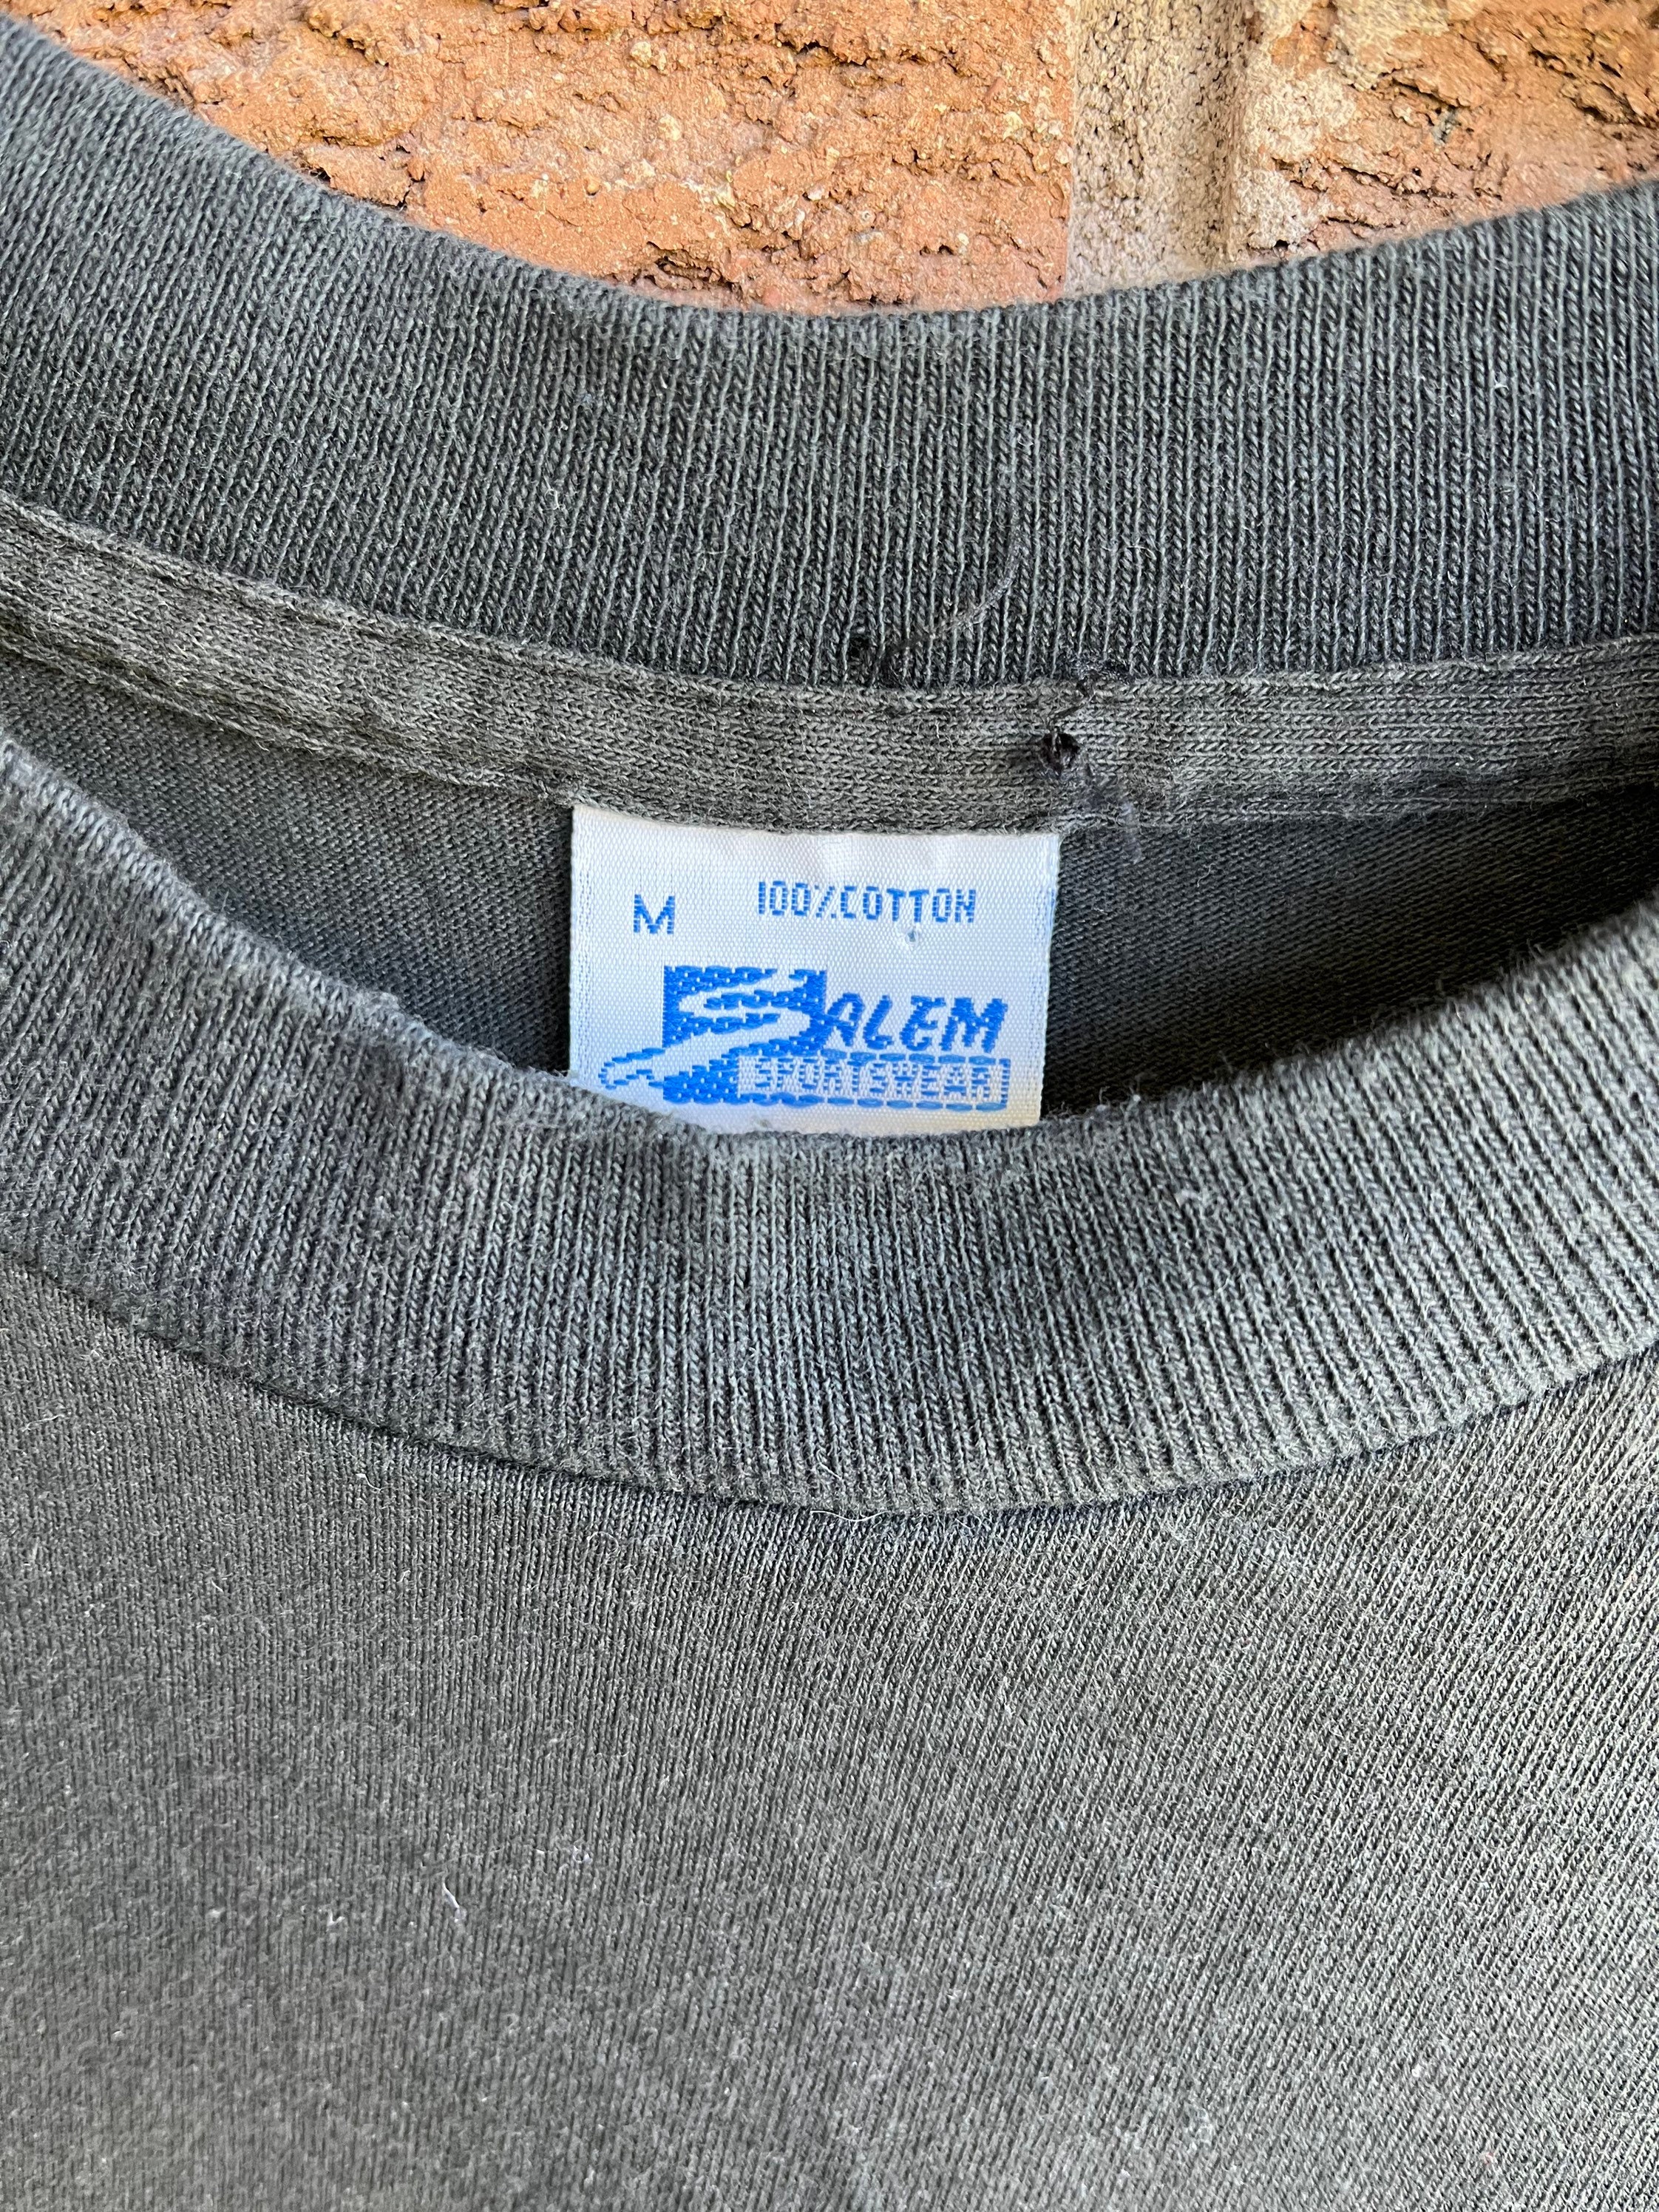  NHL Boston Bruins Center Logo Women's T-Shirt, Small : Sports  Related Merchandise : Sports & Outdoors